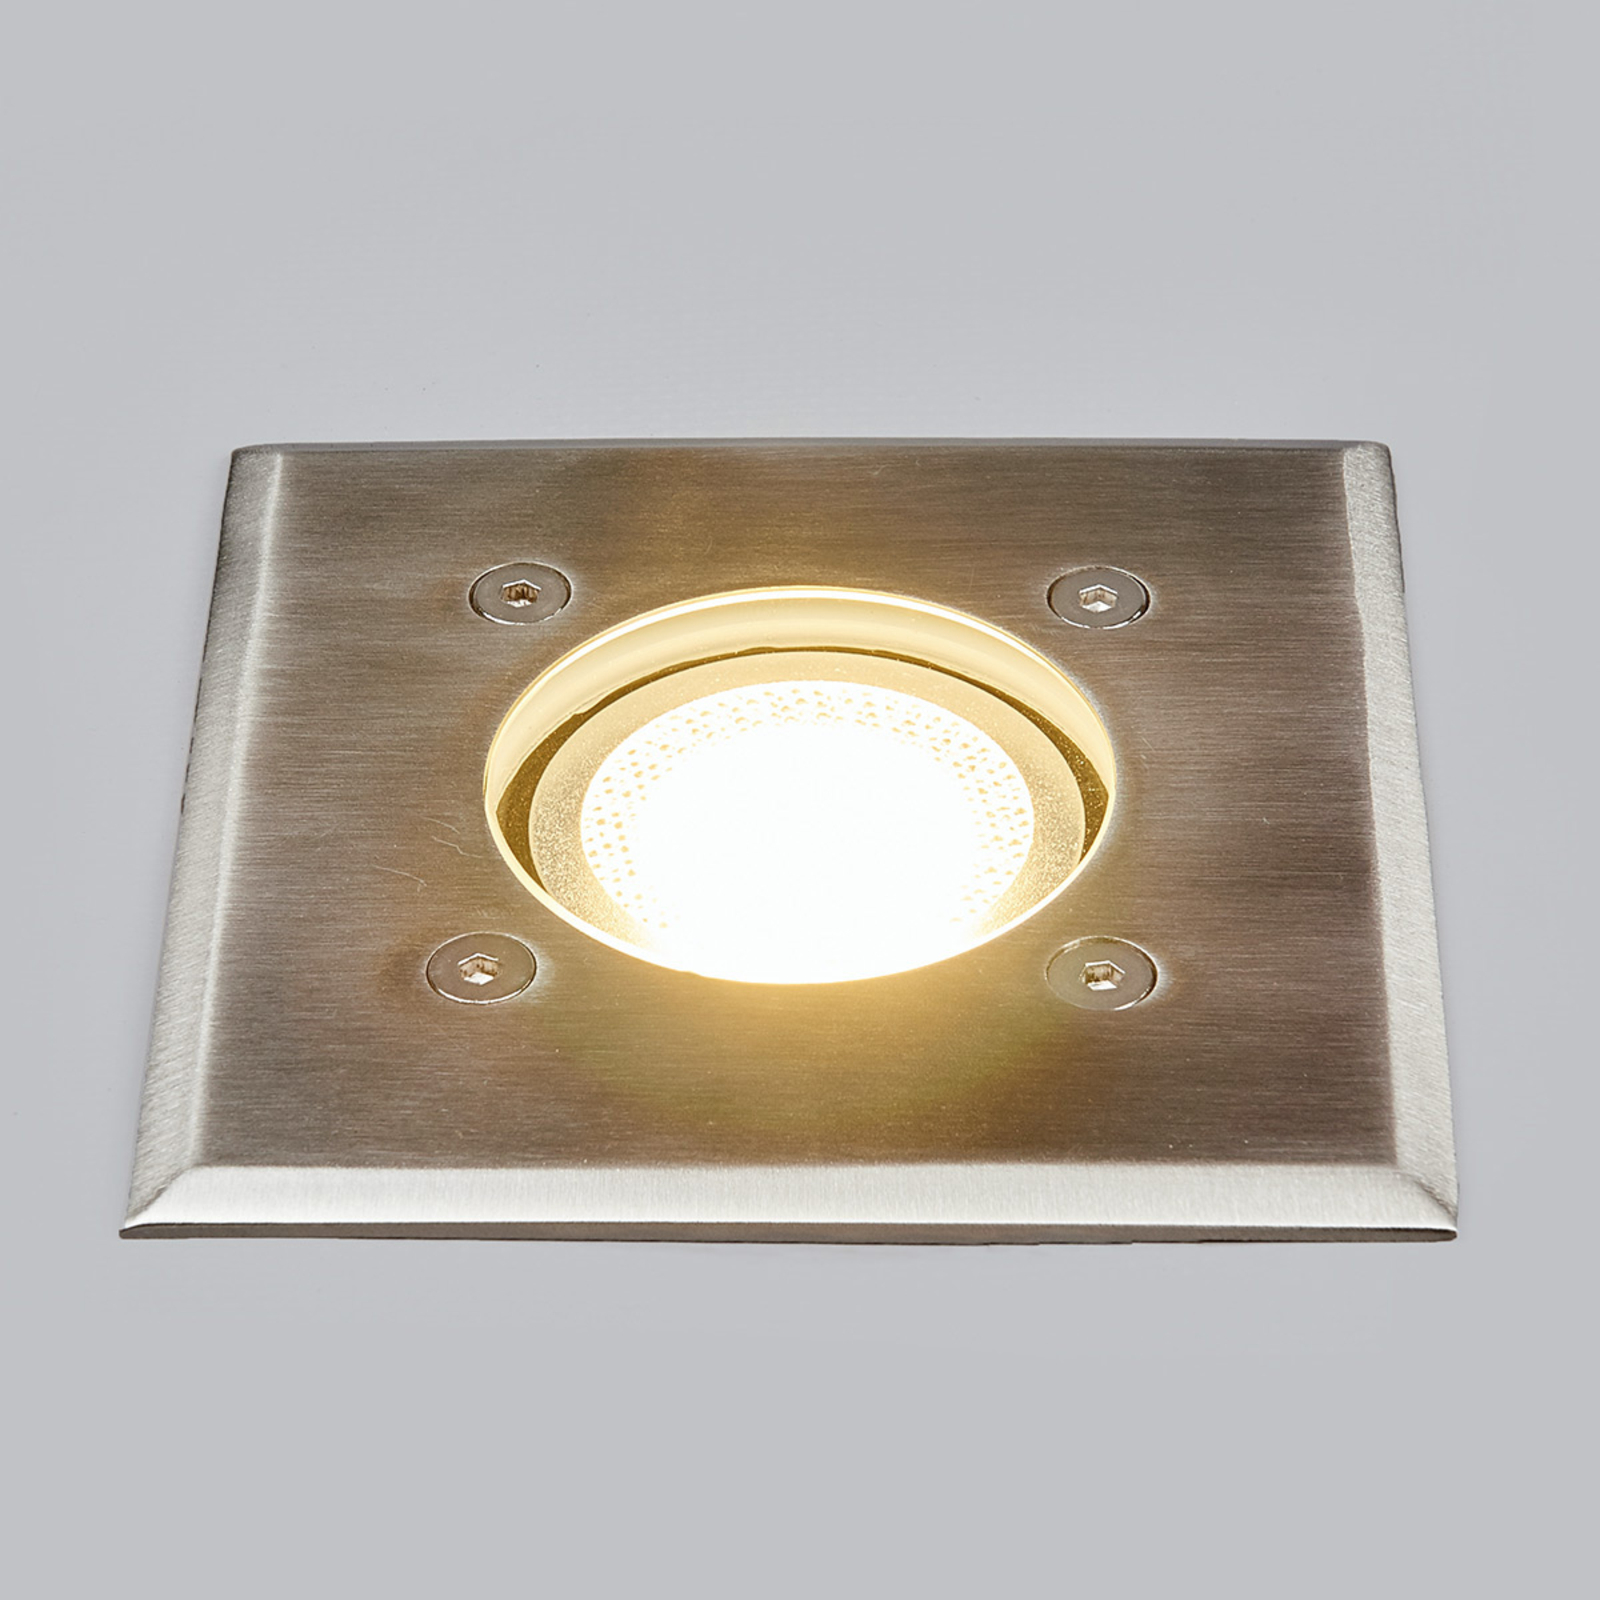 Angular stainless steel recessed floor light Insa